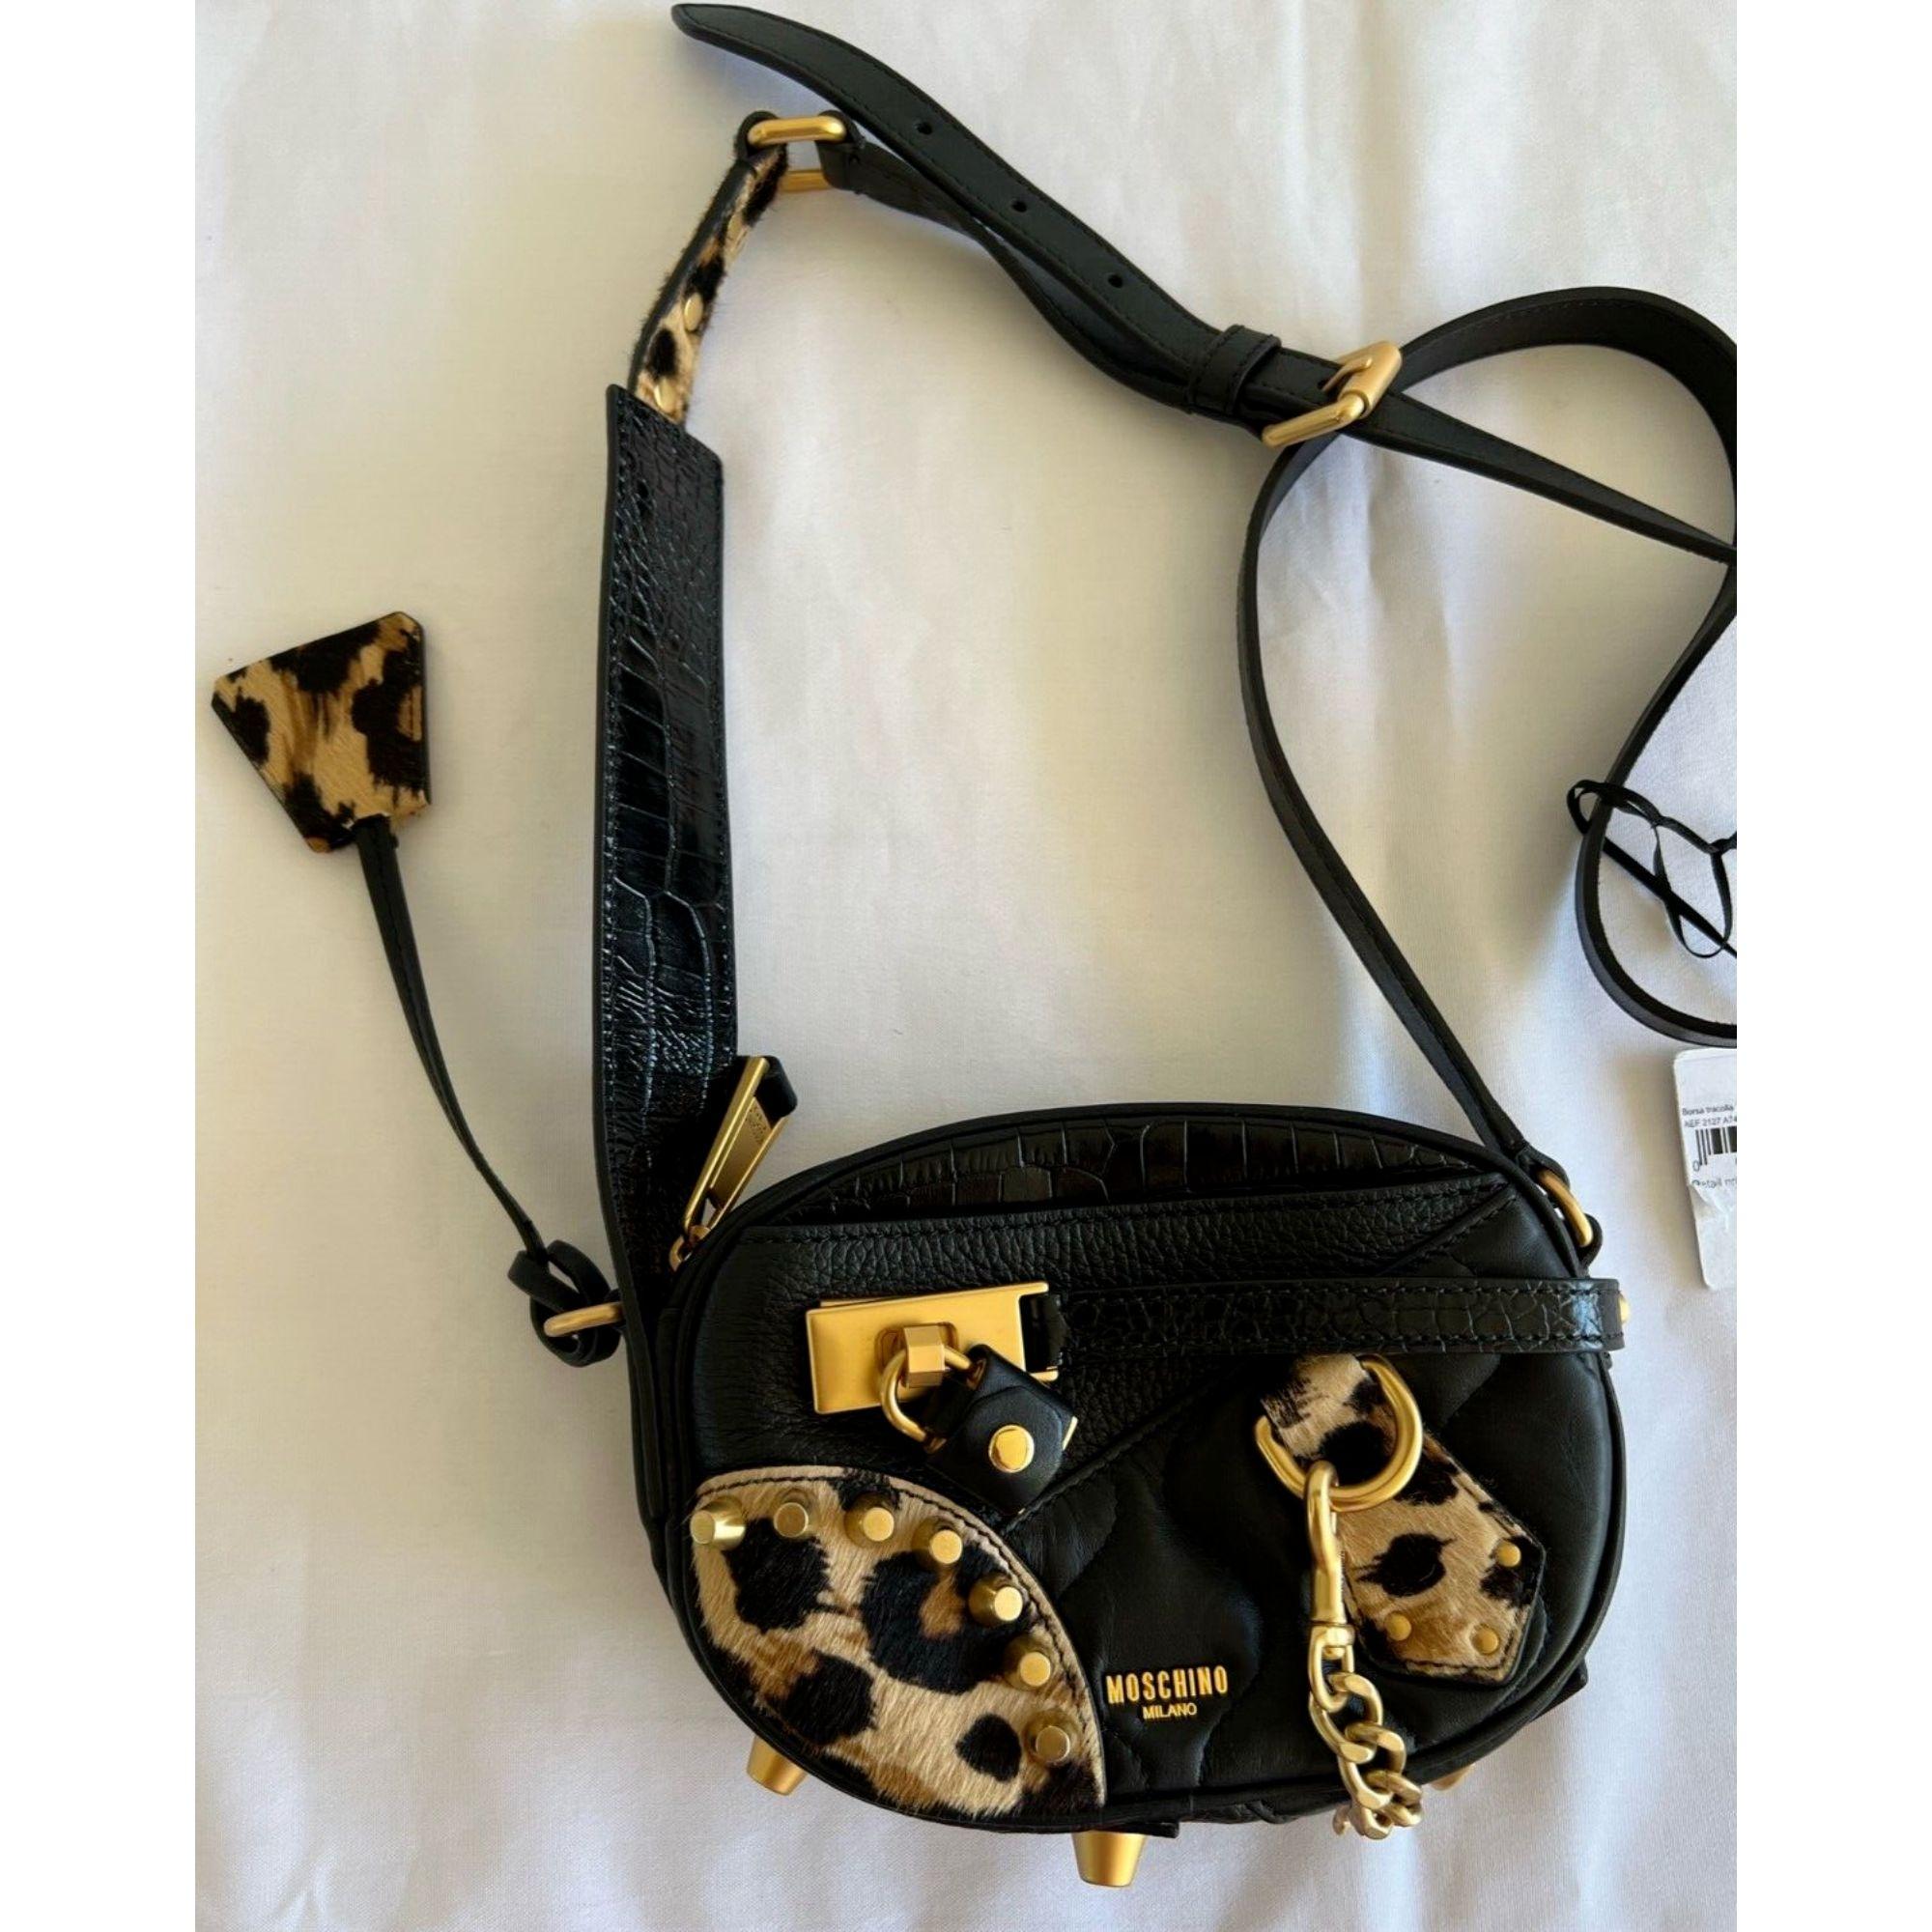 AW21 Moschino Couture Jeremy Scott Gold Leopard Black Leather Shoulder Bag

Additional Information:
Material: 100% VL
Color: Black, Leopard, Gold-toned accents
Size: Medium
Style: Shoulder Bag
Pattern: Leopard
Dimensions: 7.5